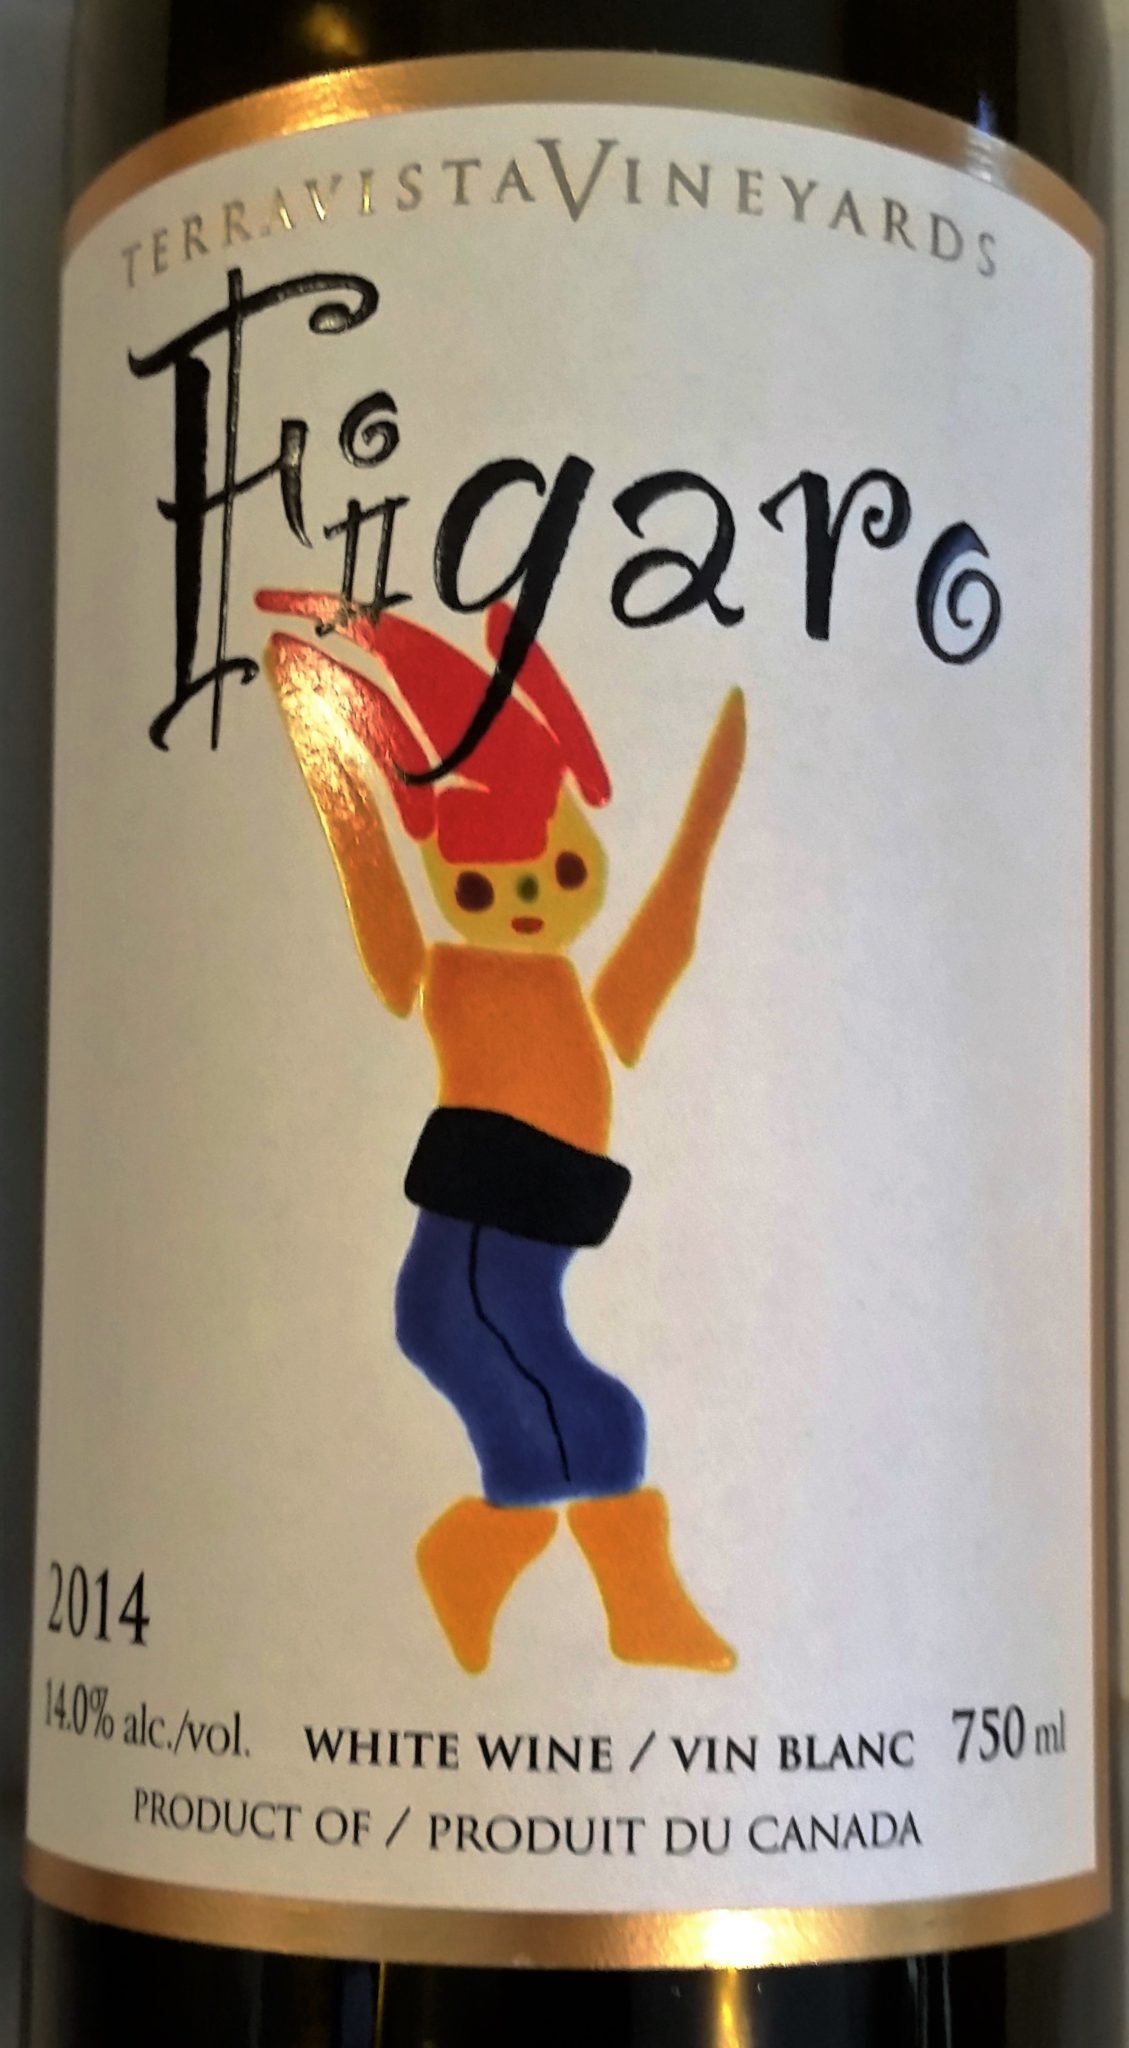 Terravista Vineyards fFgaro